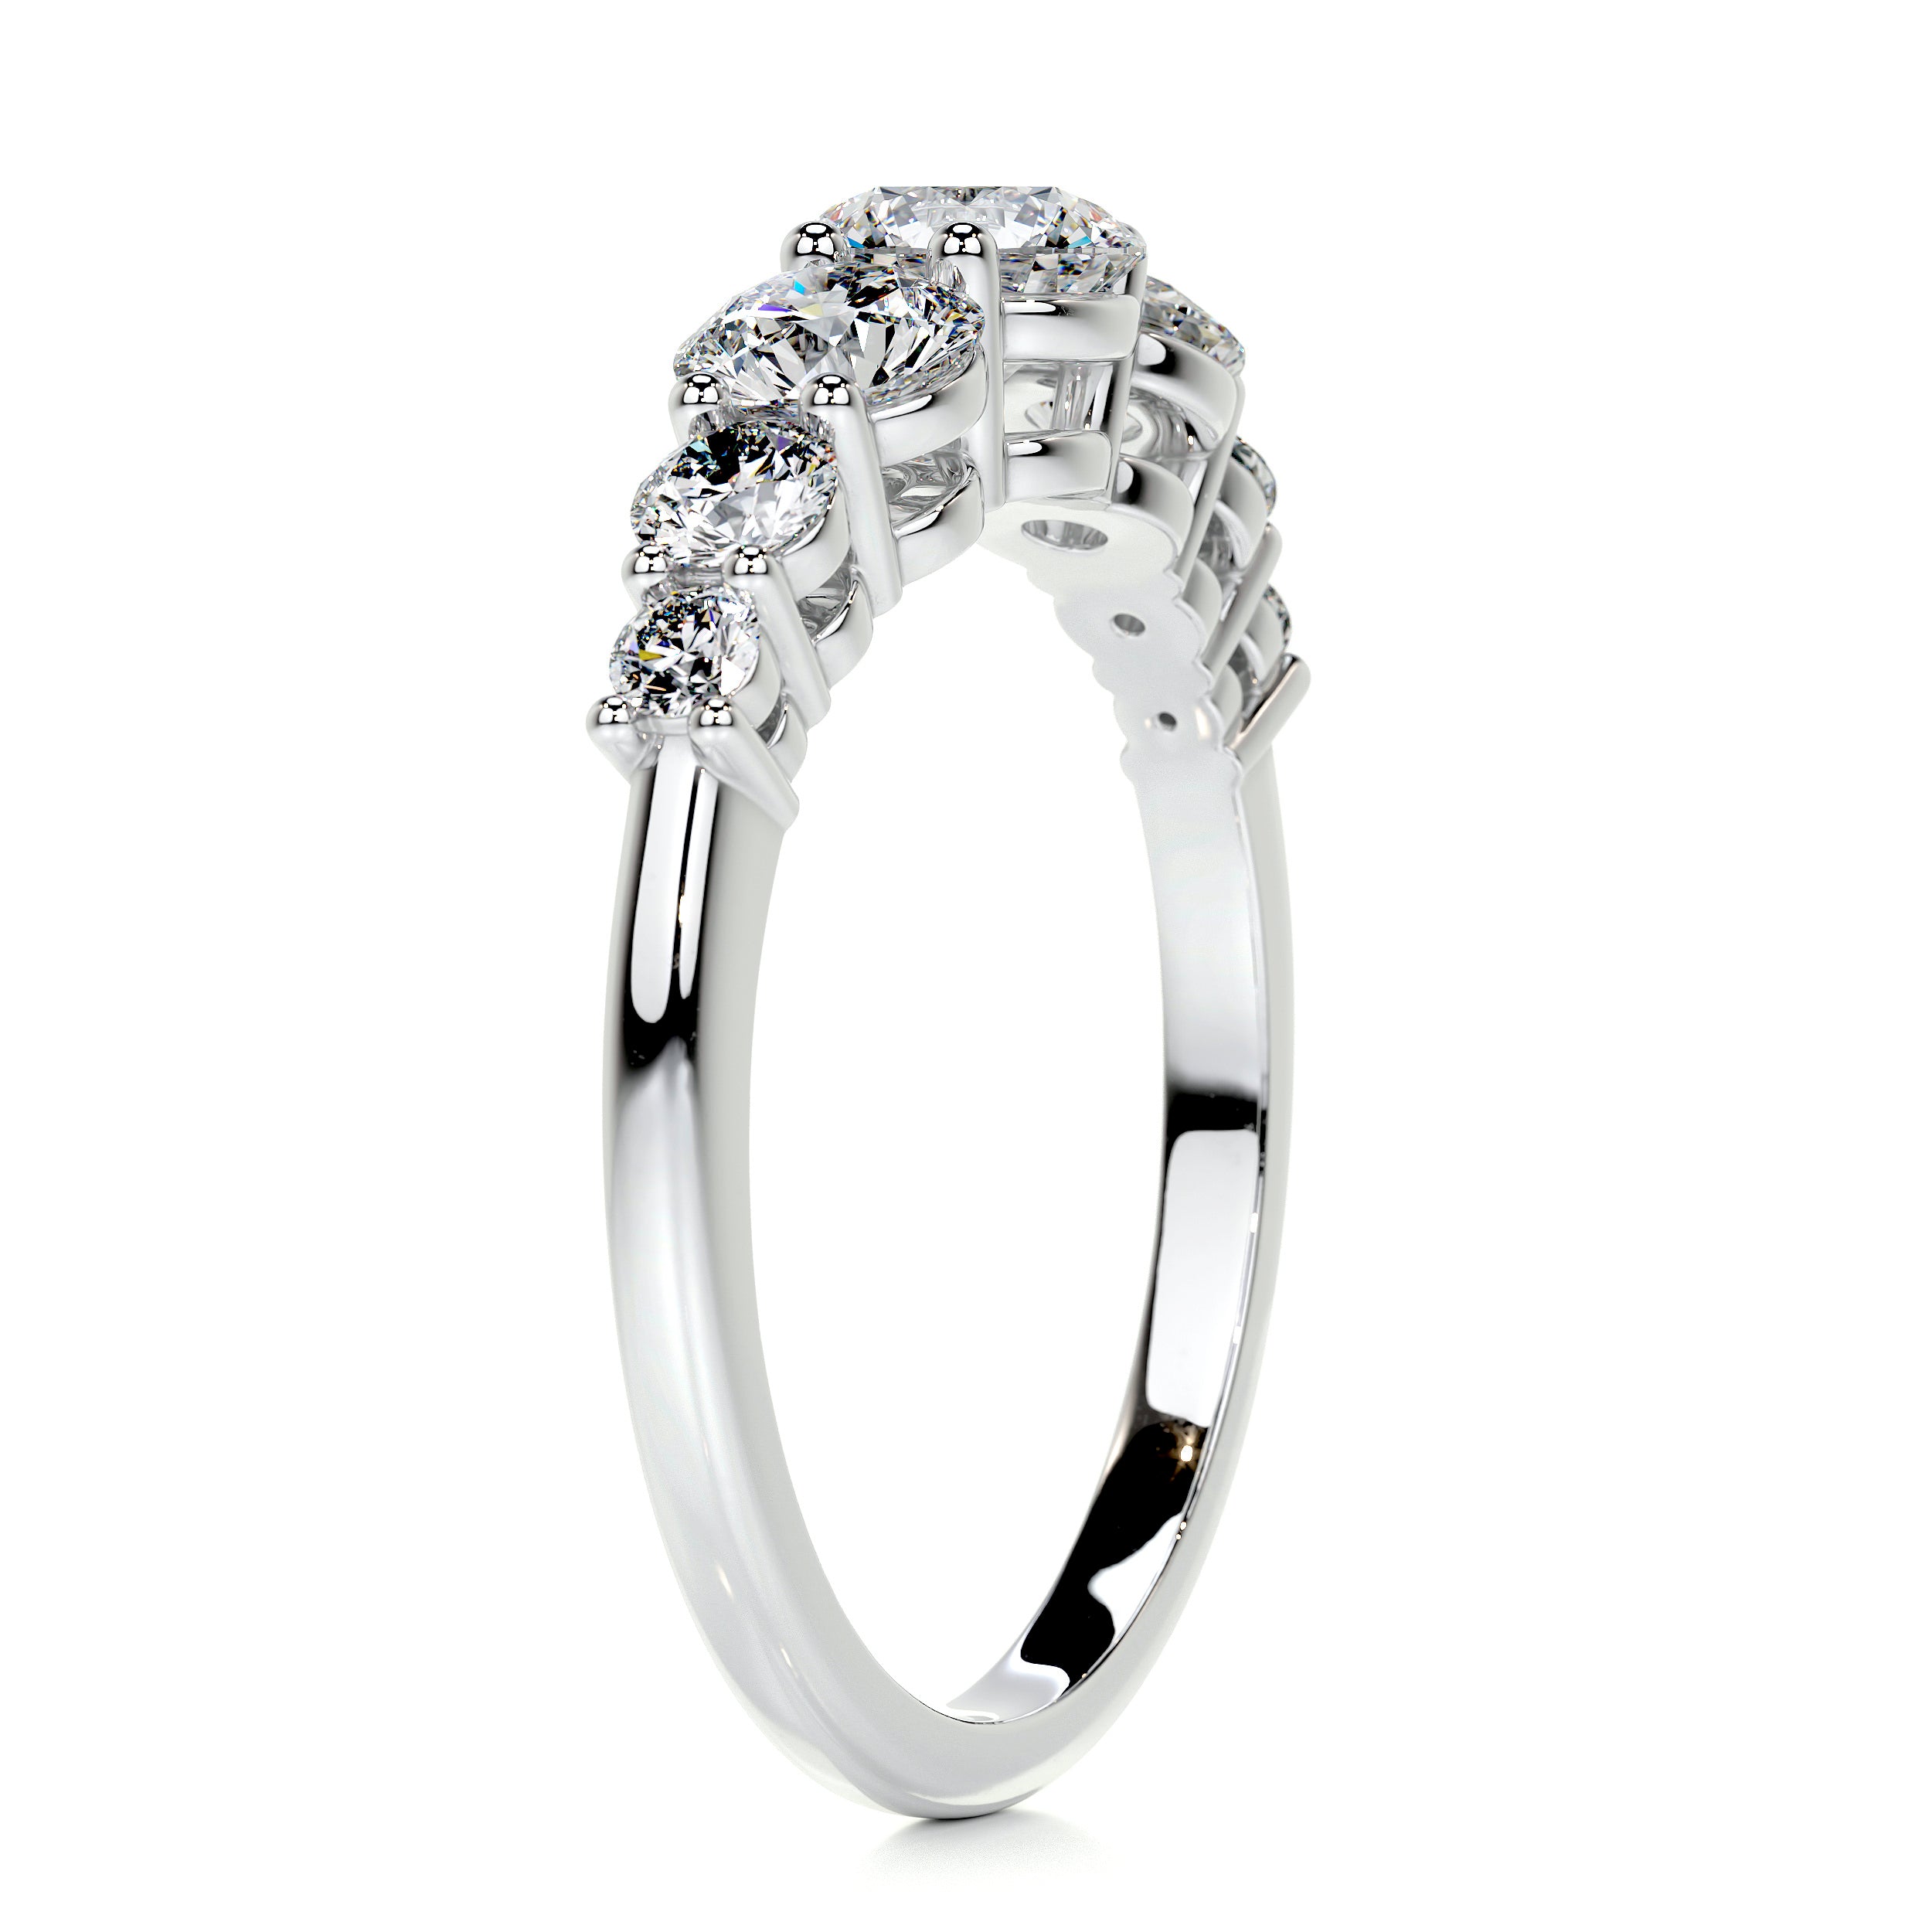 Makenzi Diamond Engagement Ring   (1.50 Carat) -14K White Gold